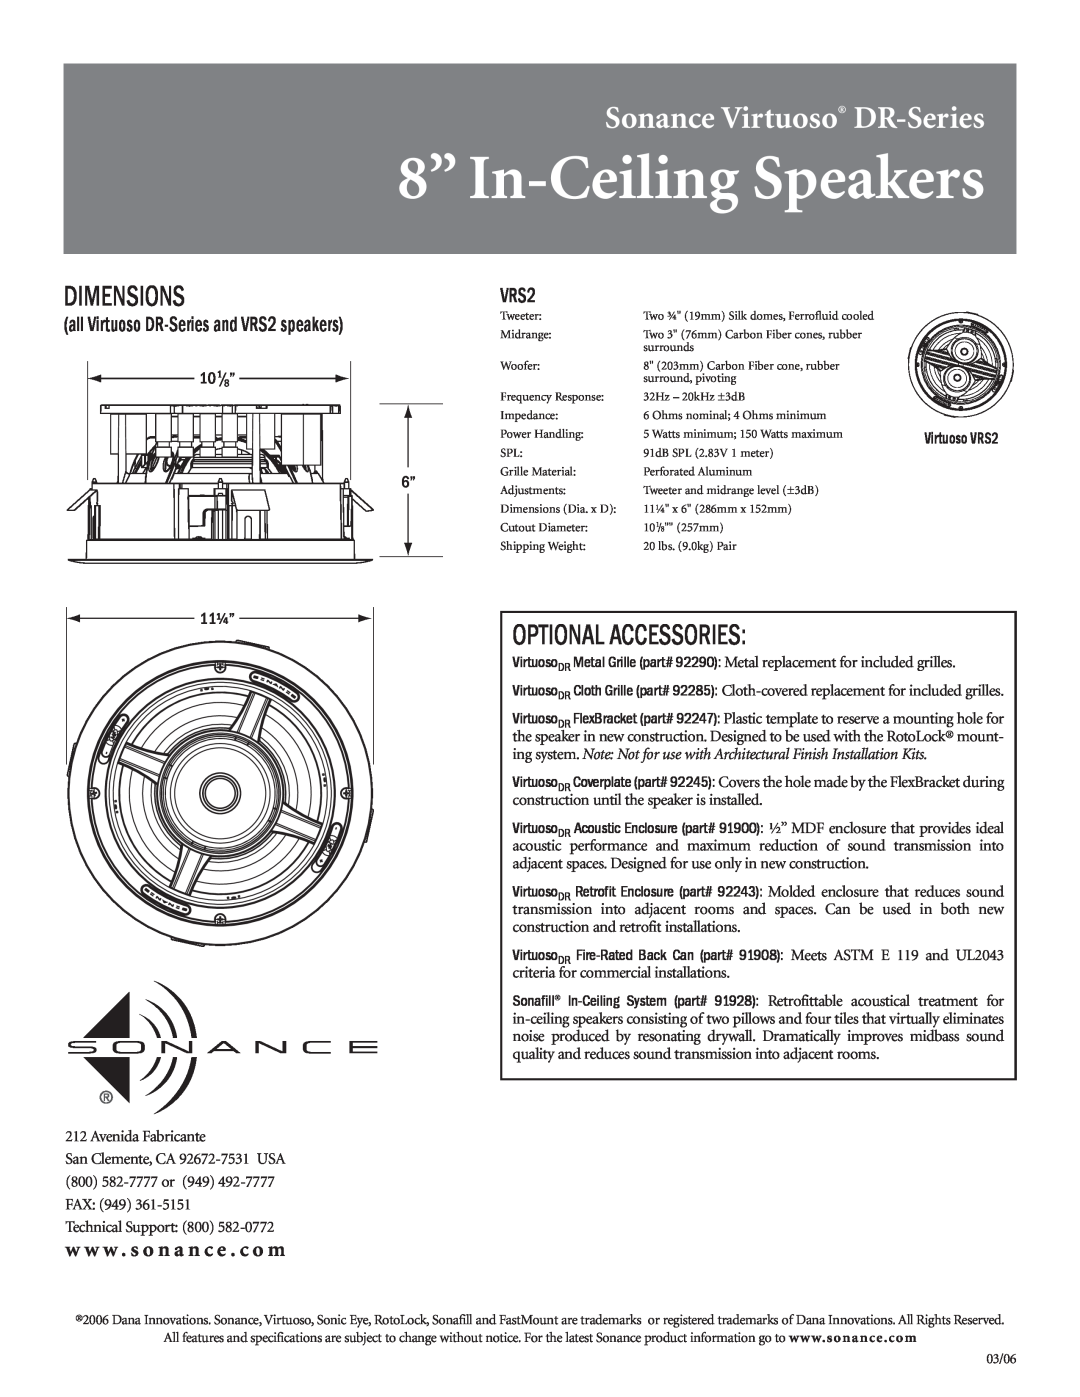 Sonance V832DR, V833DR Dimensions, Optional Accessories, all Virtuoso DR-Seriesand VRS2 speakers, 8” In-CeilingSpeakers 